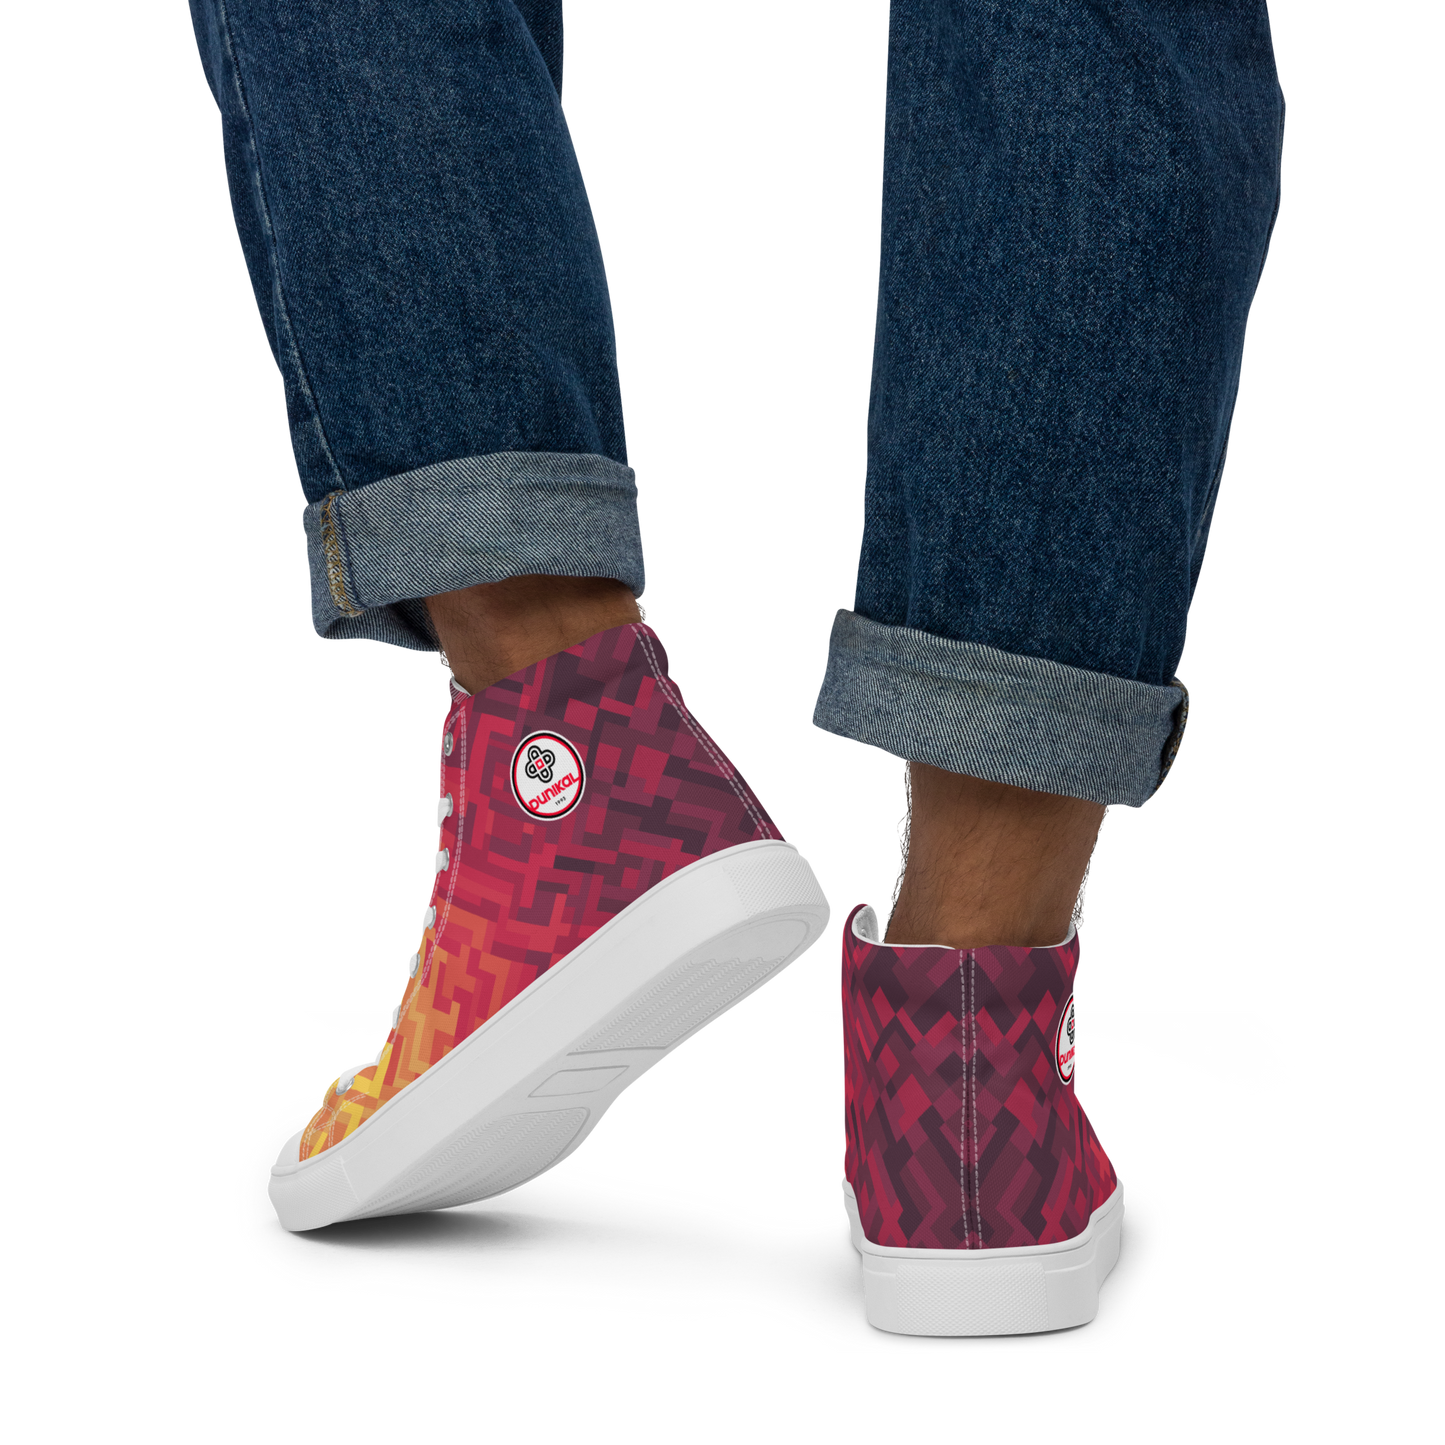 Men's Canvas Sneakers ❯ Polygonal Gradient ❯ Nebula